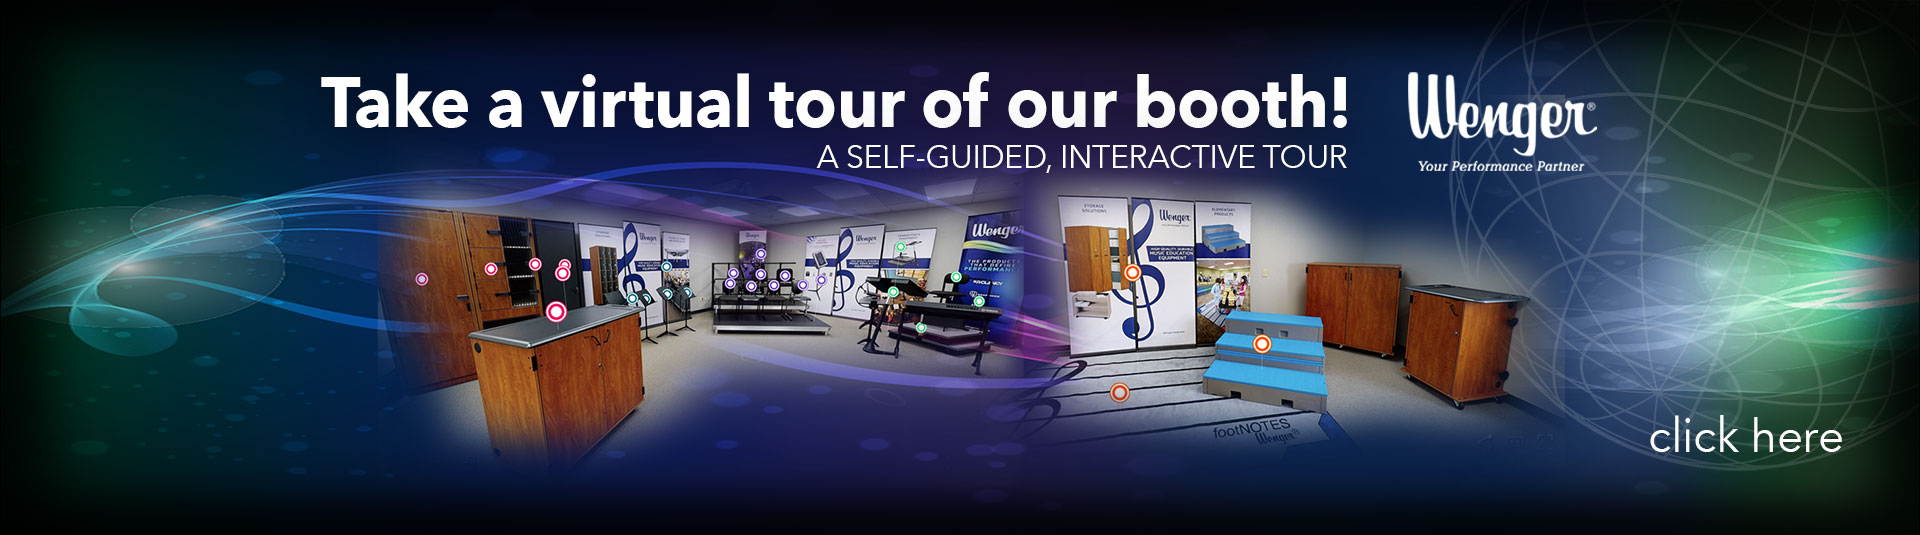 Virtual Booth Tour